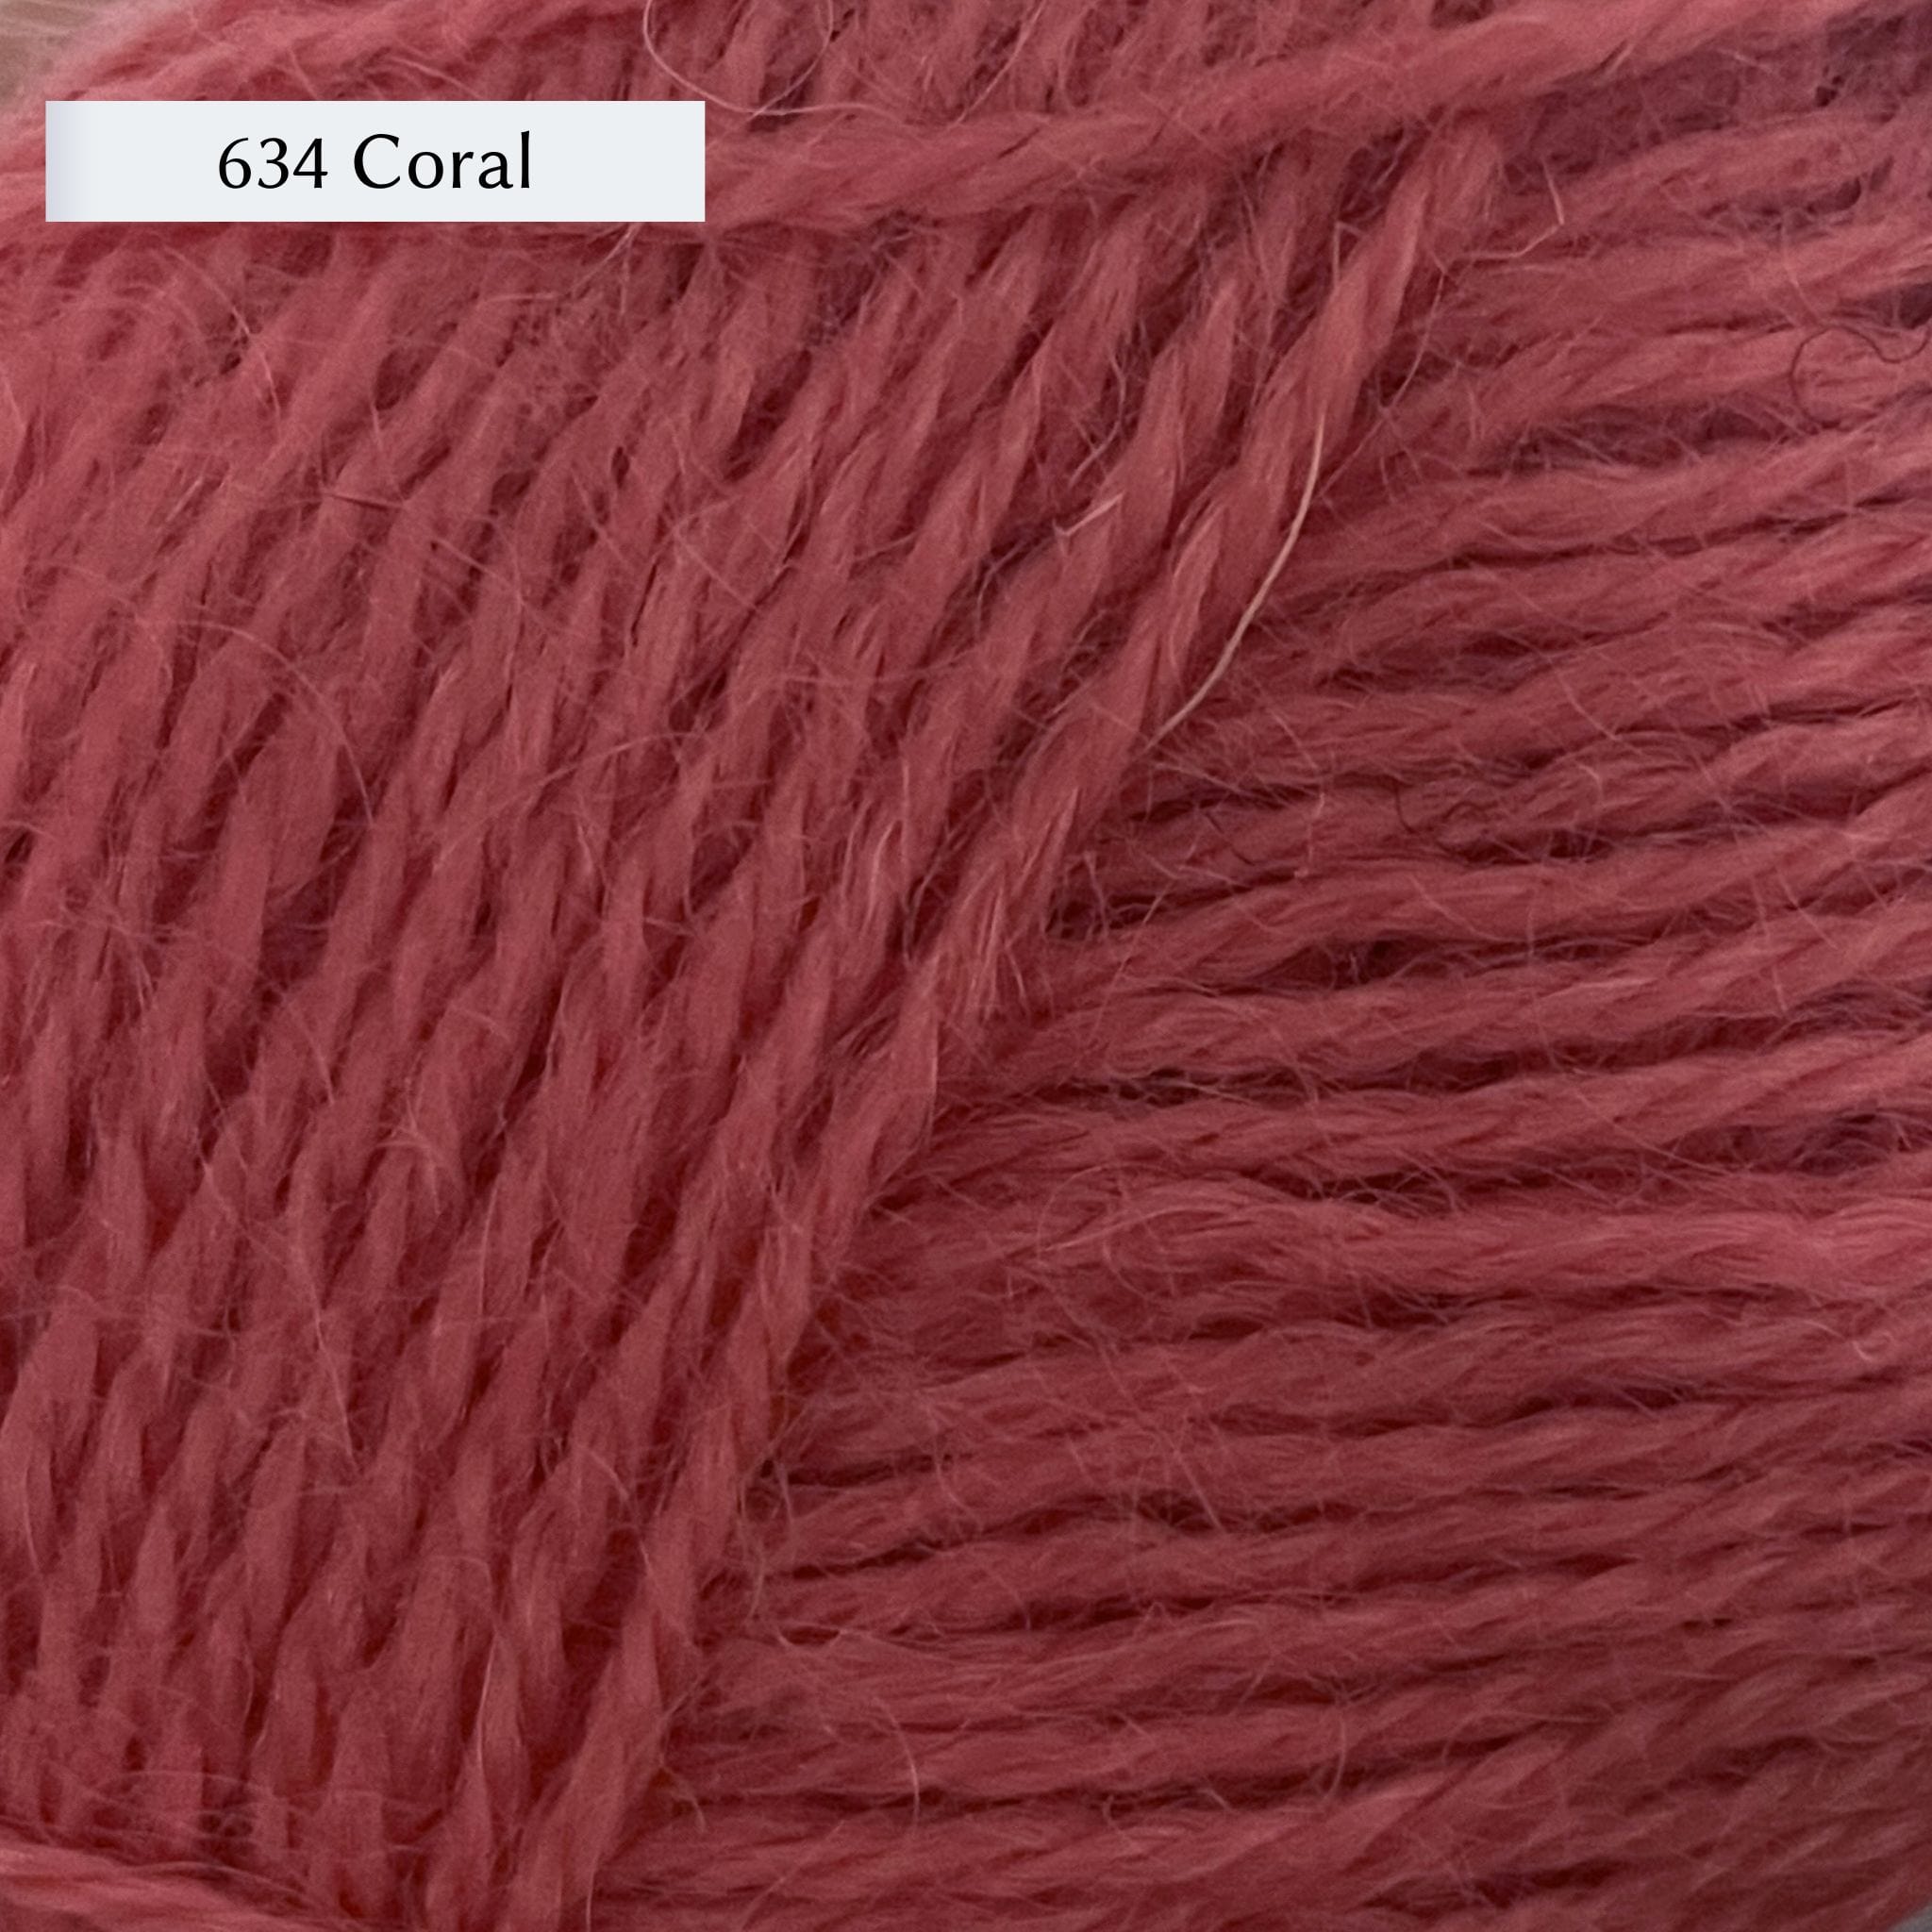 Wensleydale Longwool Sheep Shop 4ply yarn, a fingering weight yarn, in 634 Coral, a mid-tone pink-orange